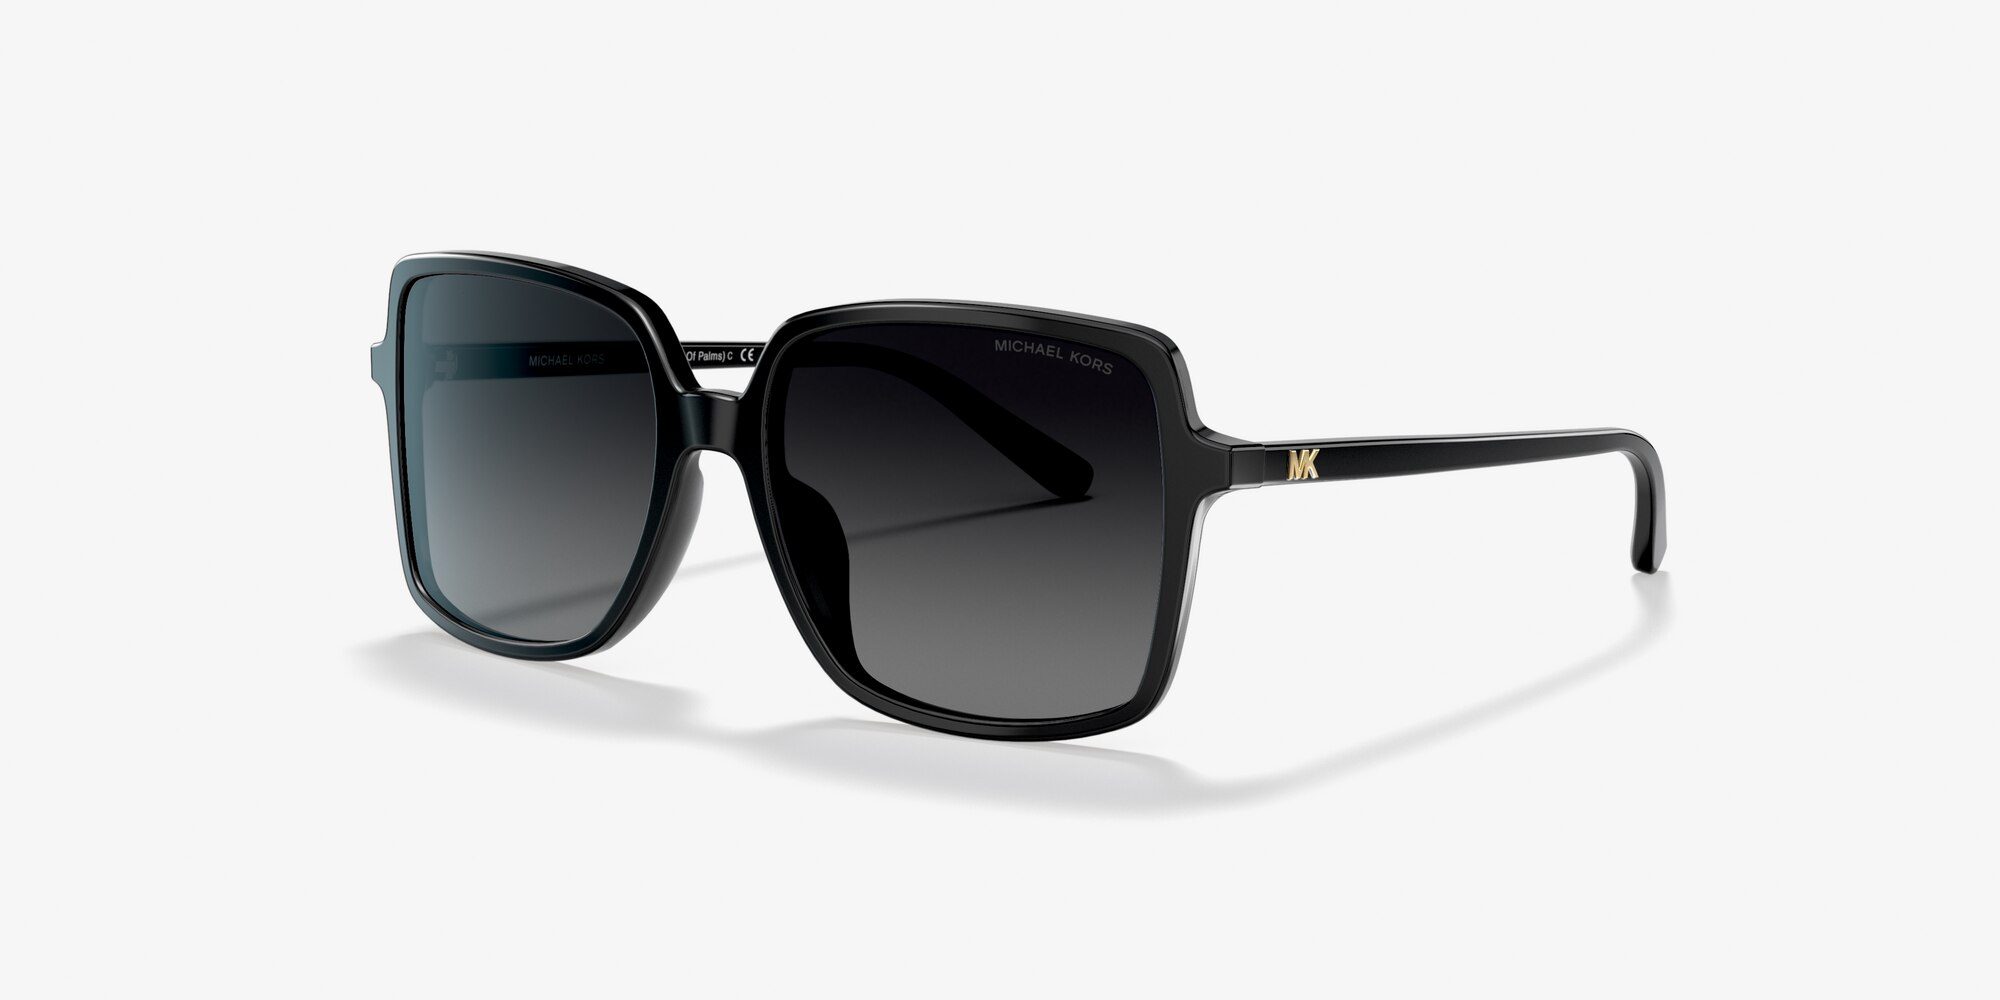 Michael Kors Larissa Women Polarized Sunglasses with CaseMK1063 1001M5 44   Buy Online in South Africa  takealotcom